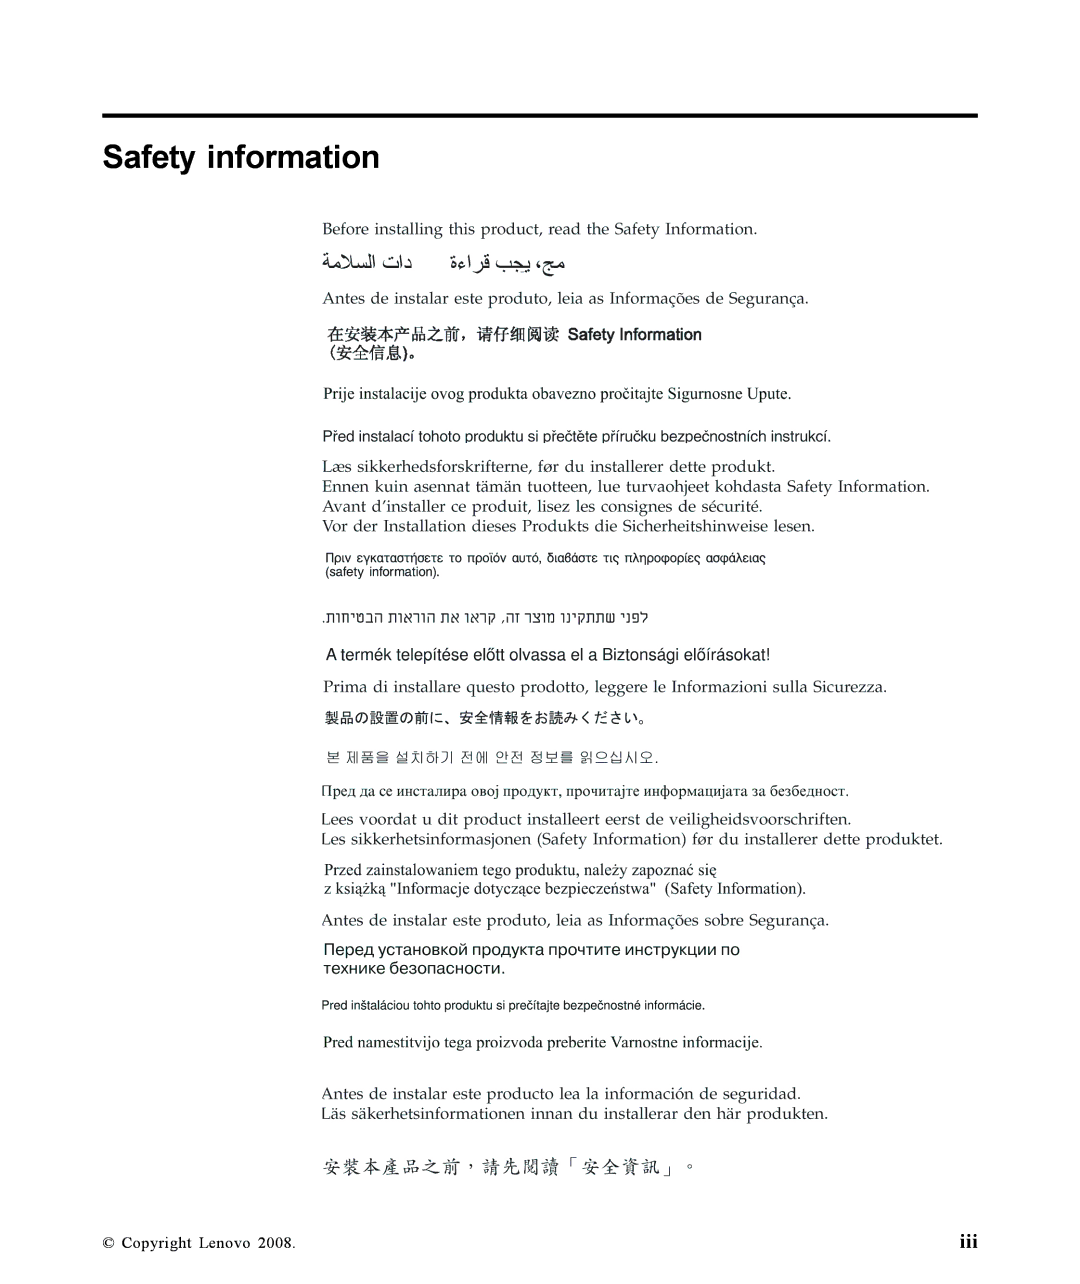 Lenovo 9417-HE2, L1700p manual Safety information 